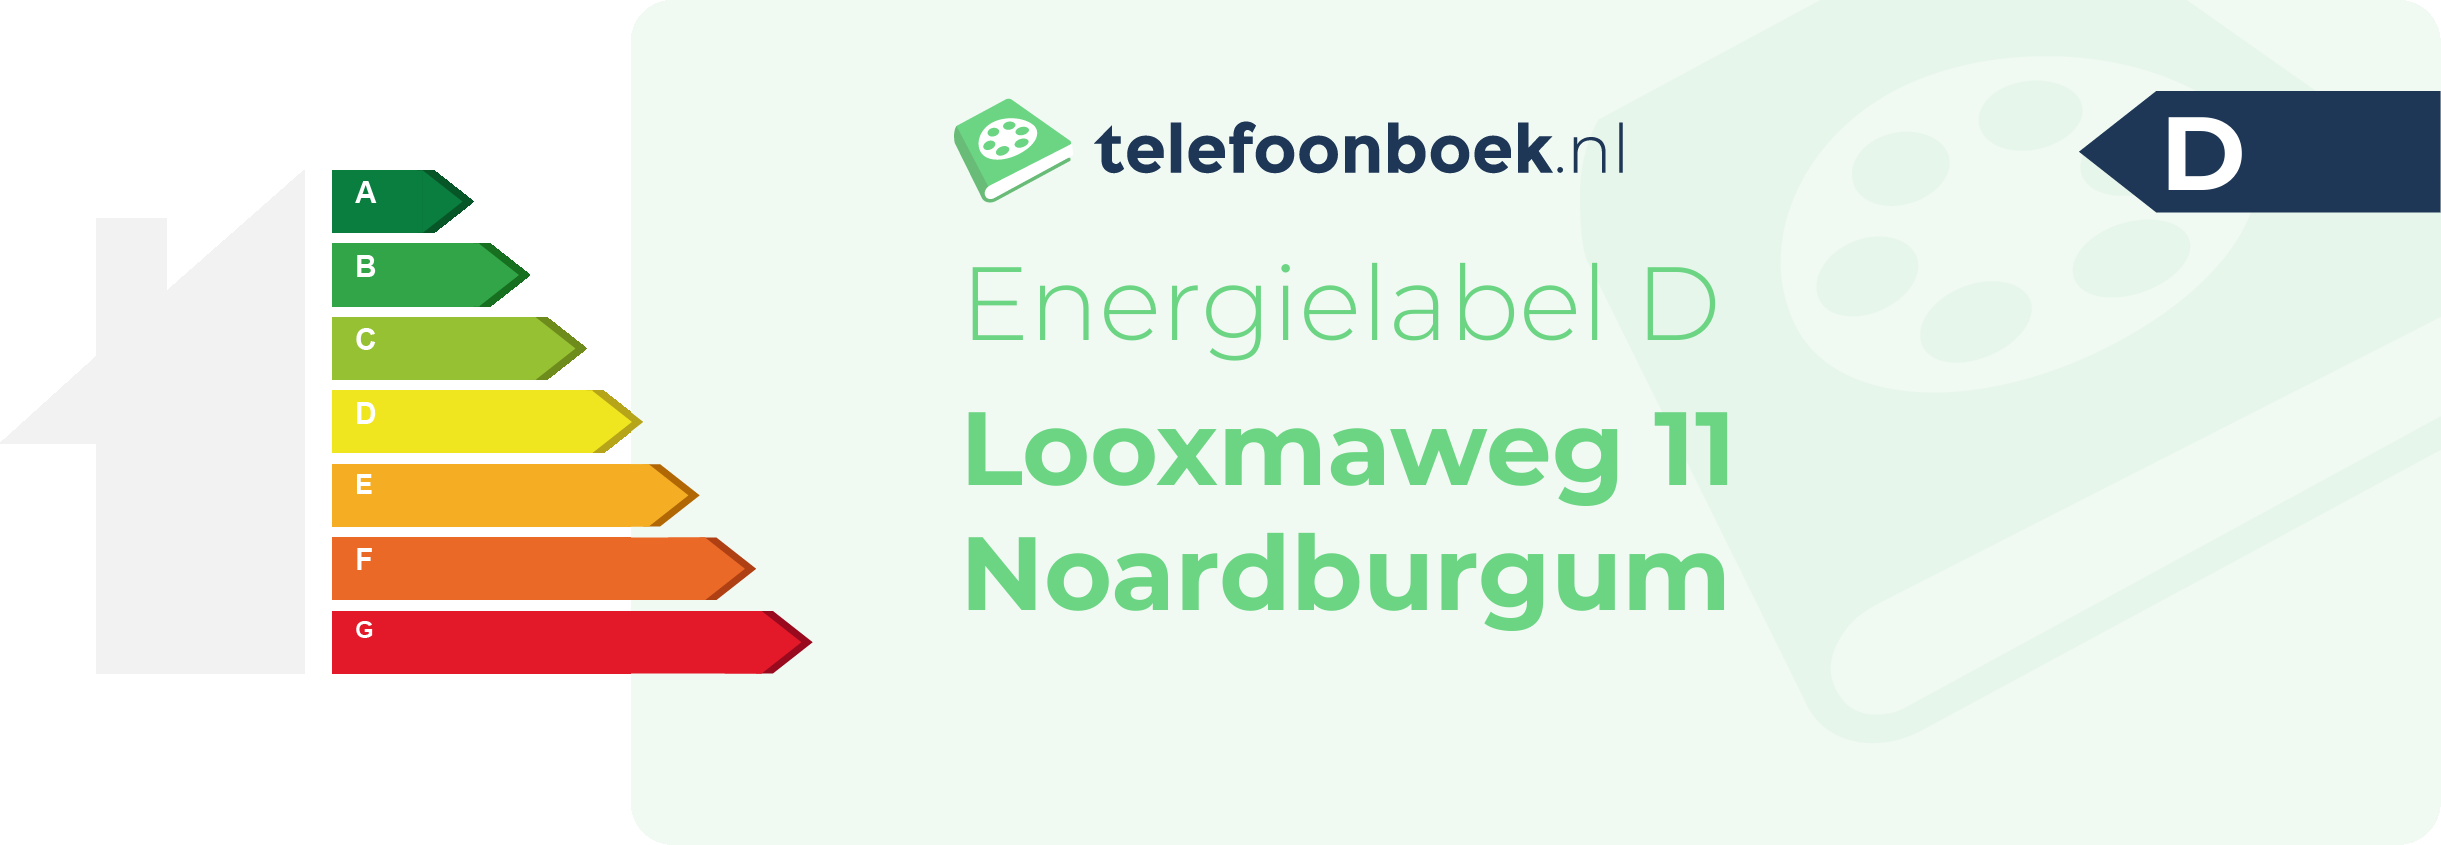 Energielabel Looxmaweg 11 Noardburgum